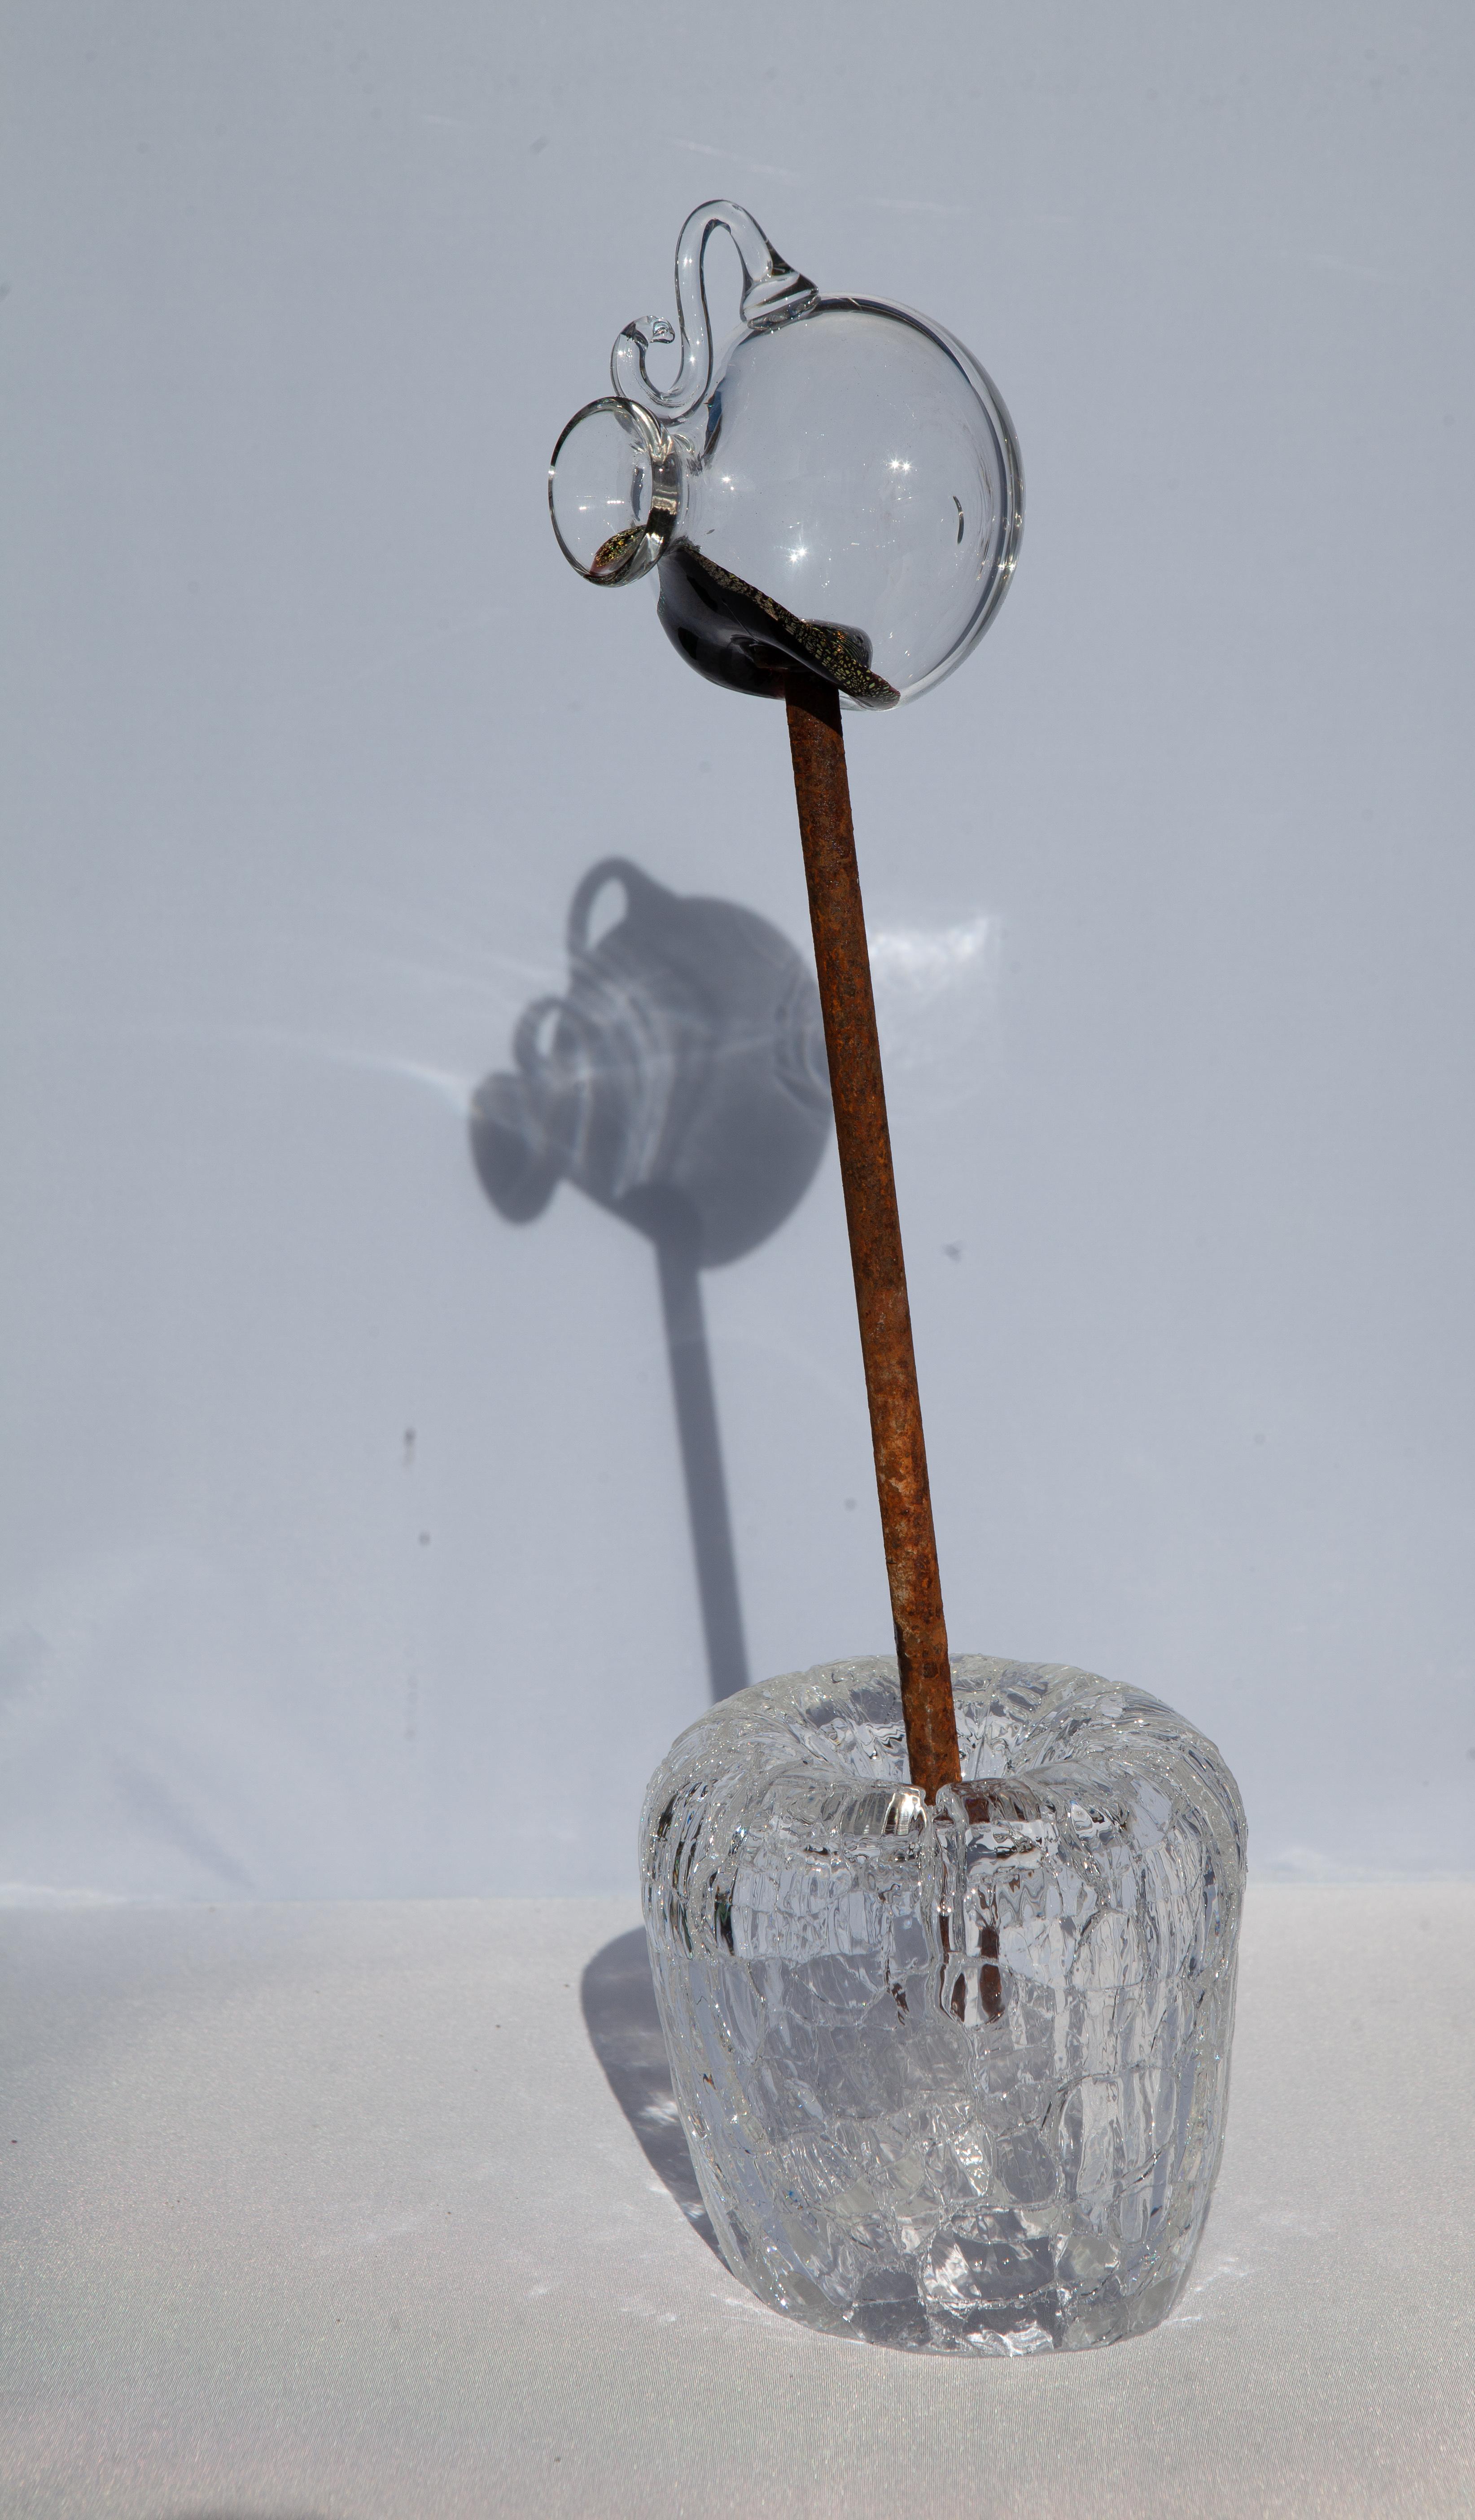 Frozen in Motion (blown glass Venetian nail craft organic rust table top object) - Mixed Media Art by Robert Burch